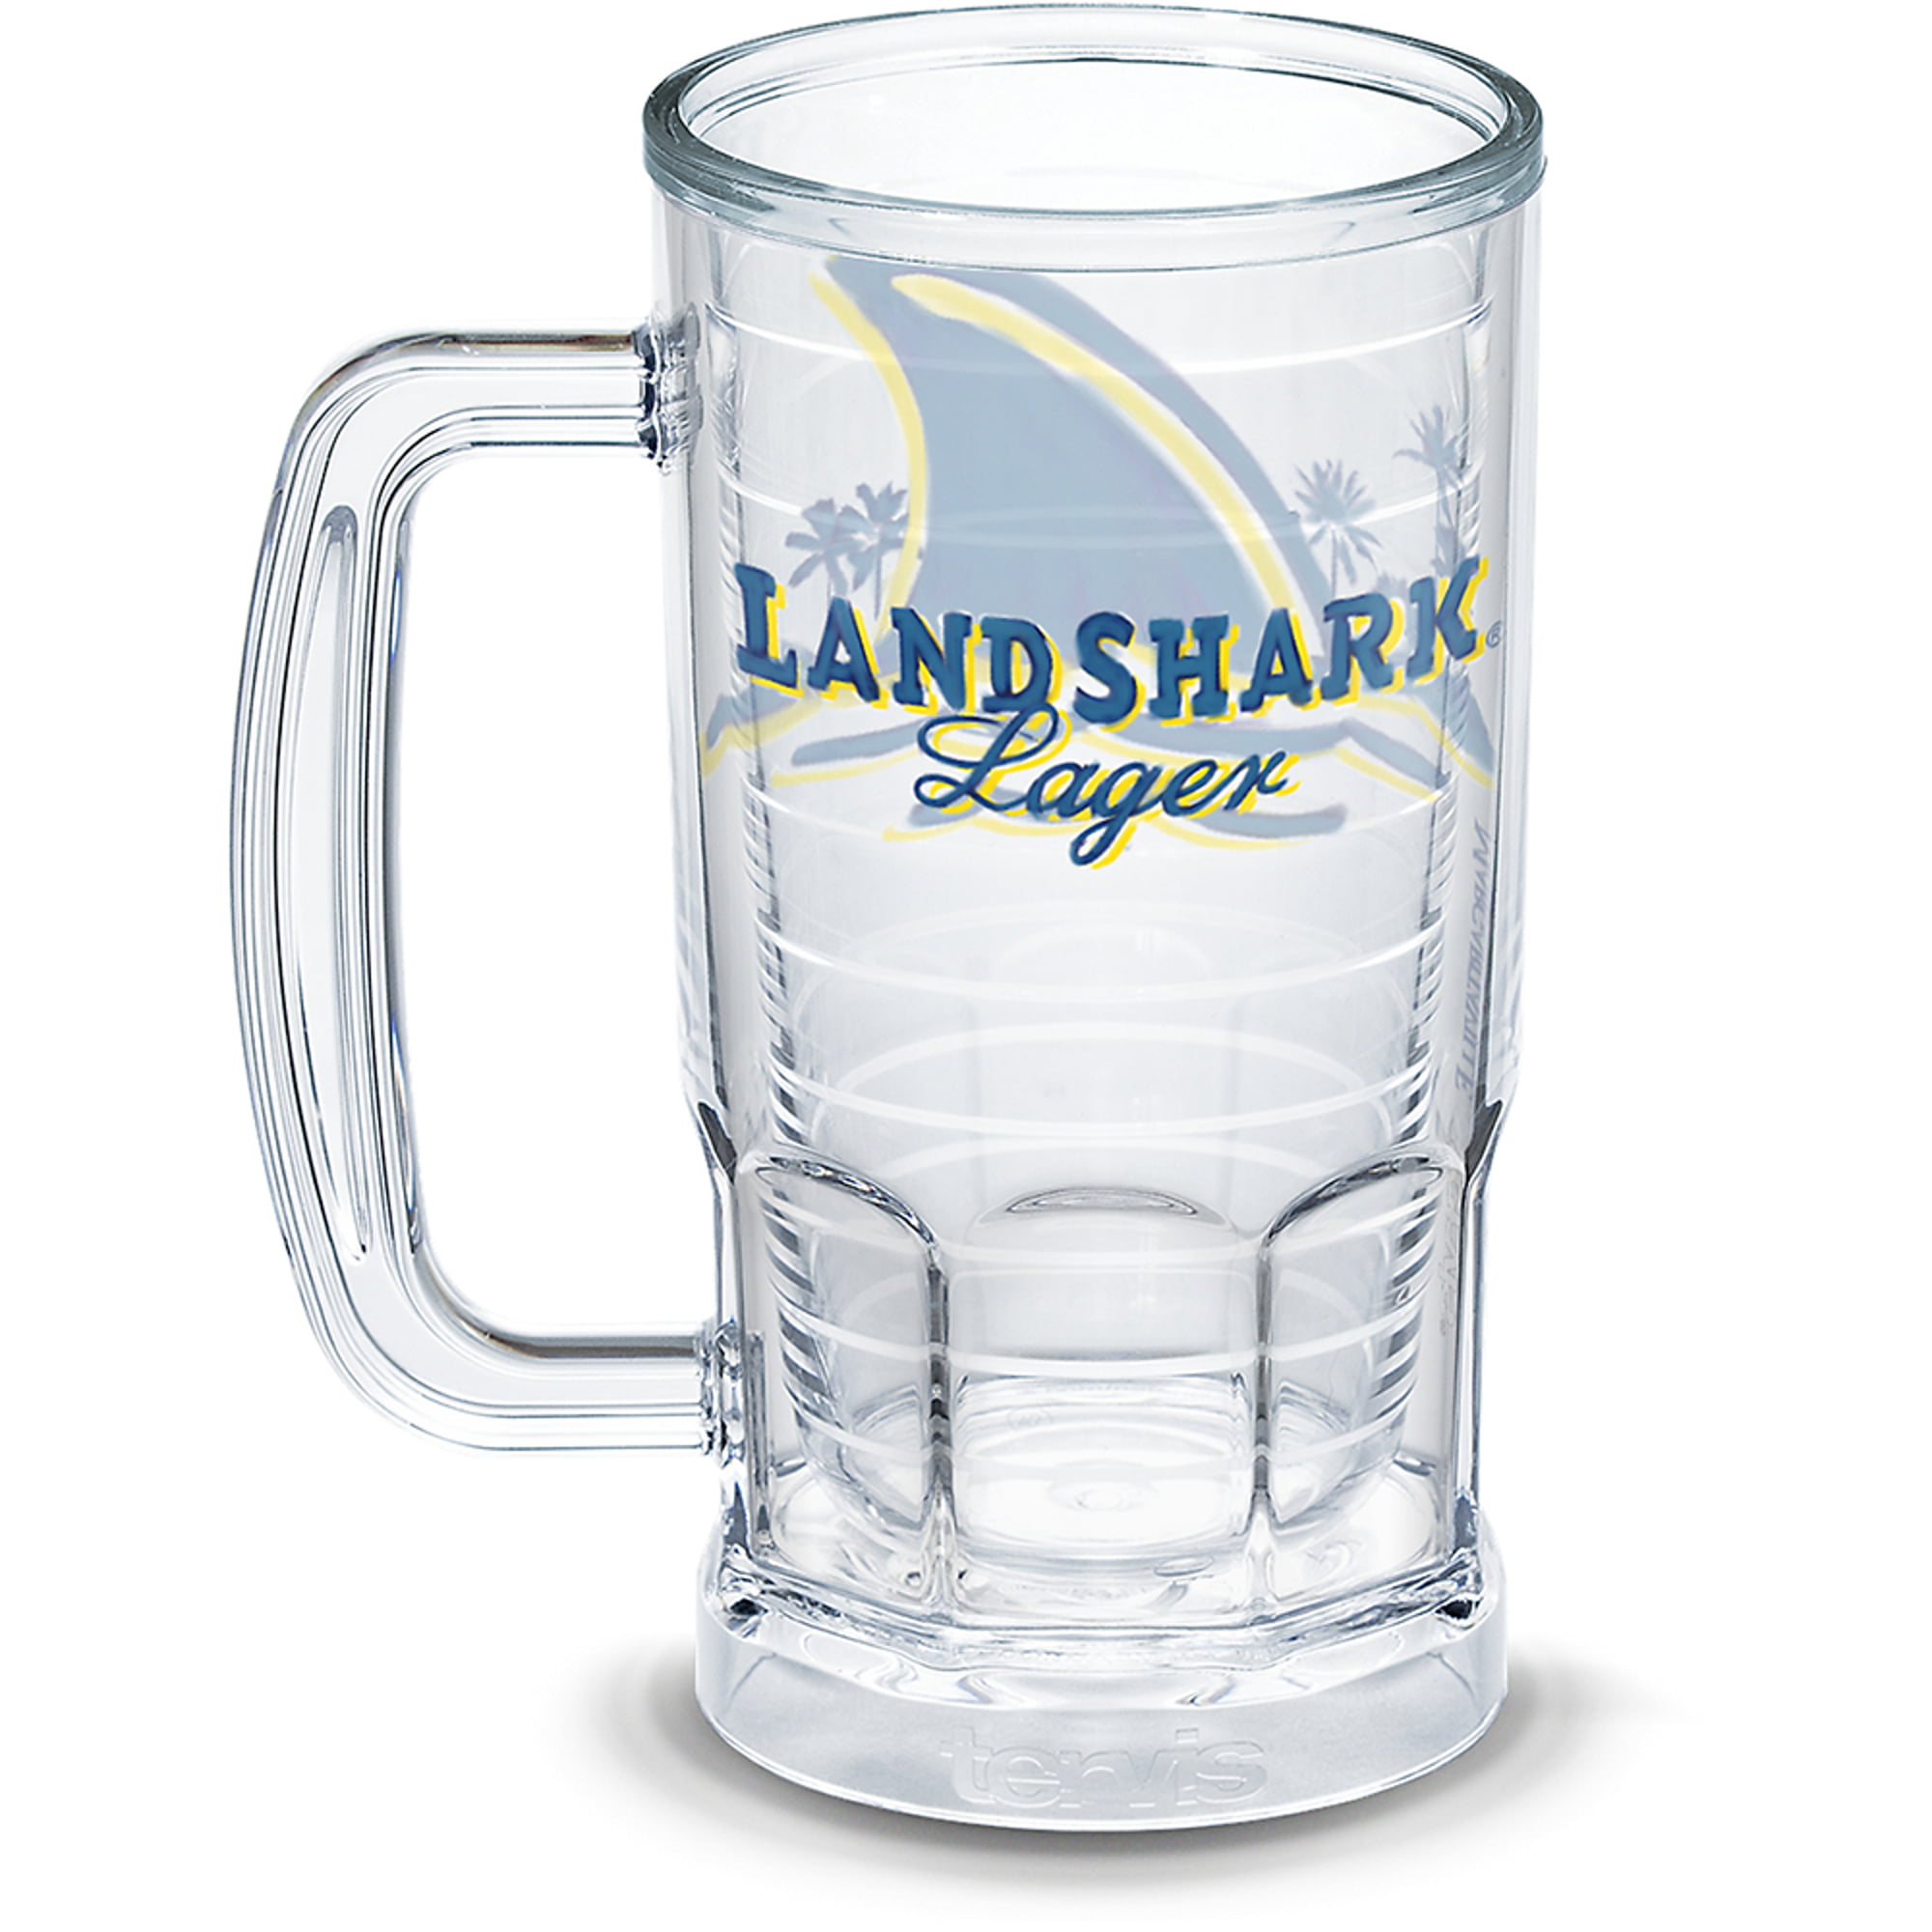 margaritaville-landshark-logo-16-oz-beer-mug-walmart-walmart